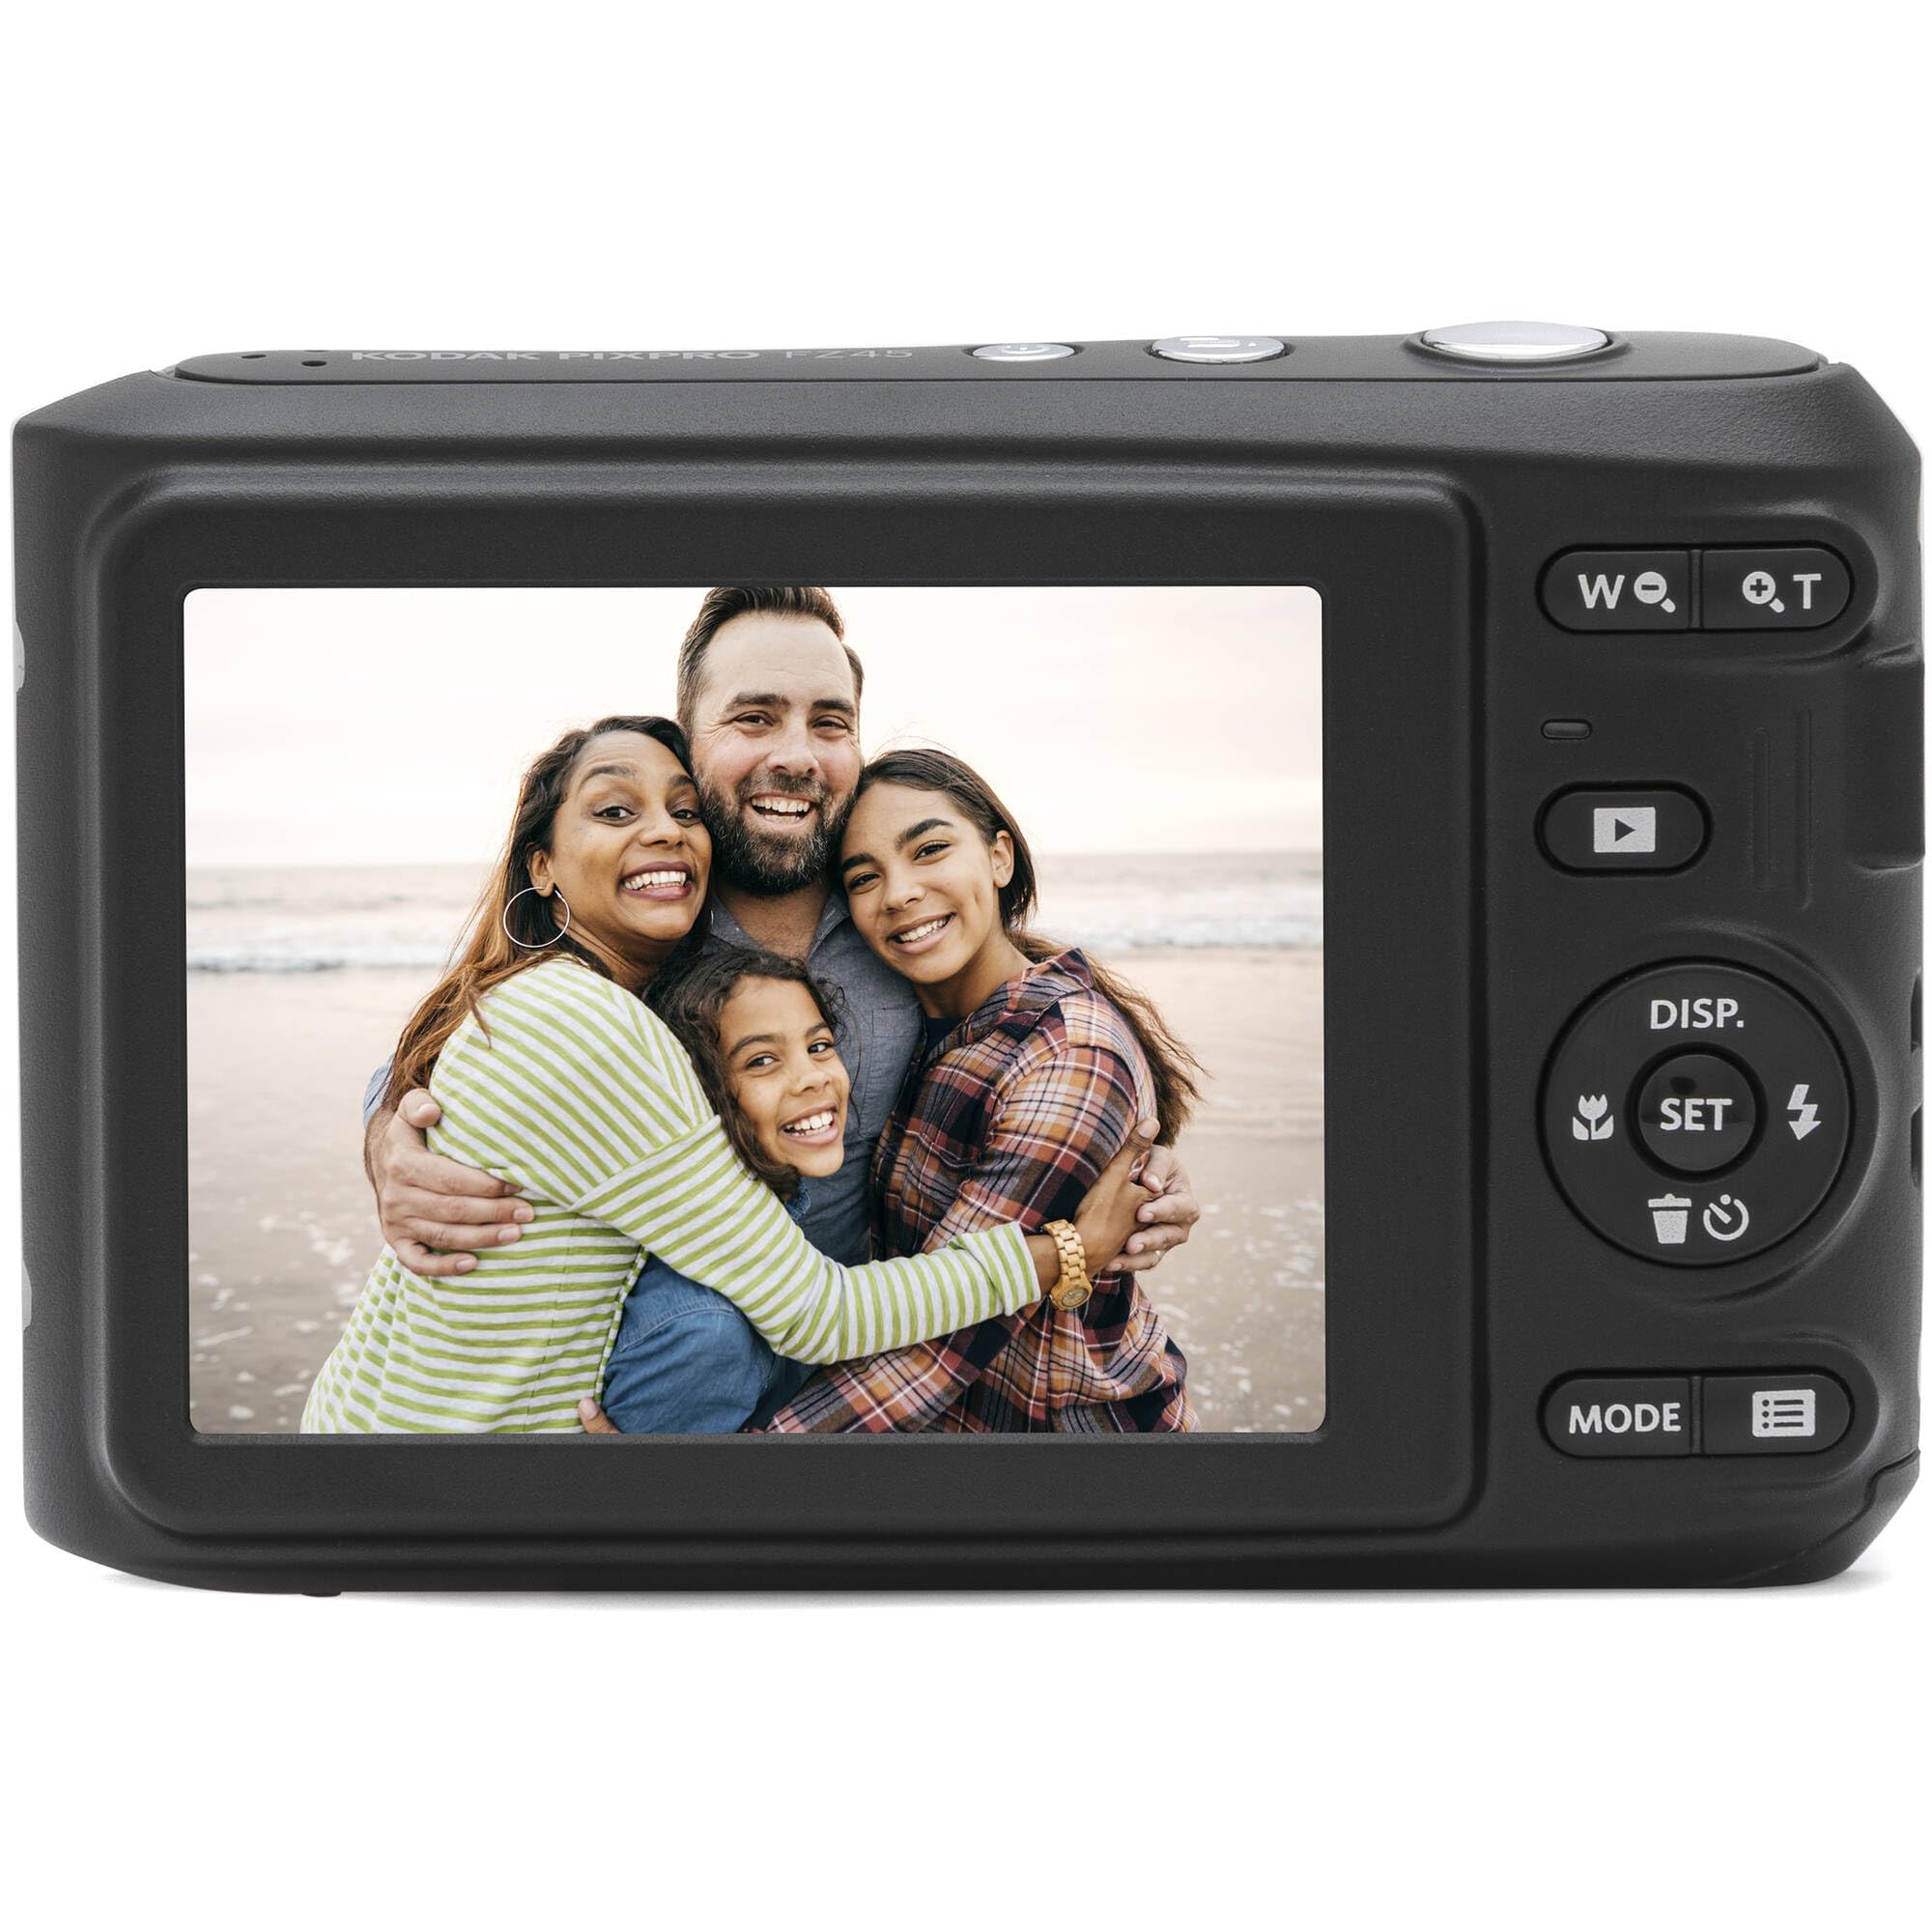 KODAK PIXPRO FZ45-WH 16MP Digital Camera 4X Optical Zoom 27mm Wide Angle 1080P Full HD Video 2.7